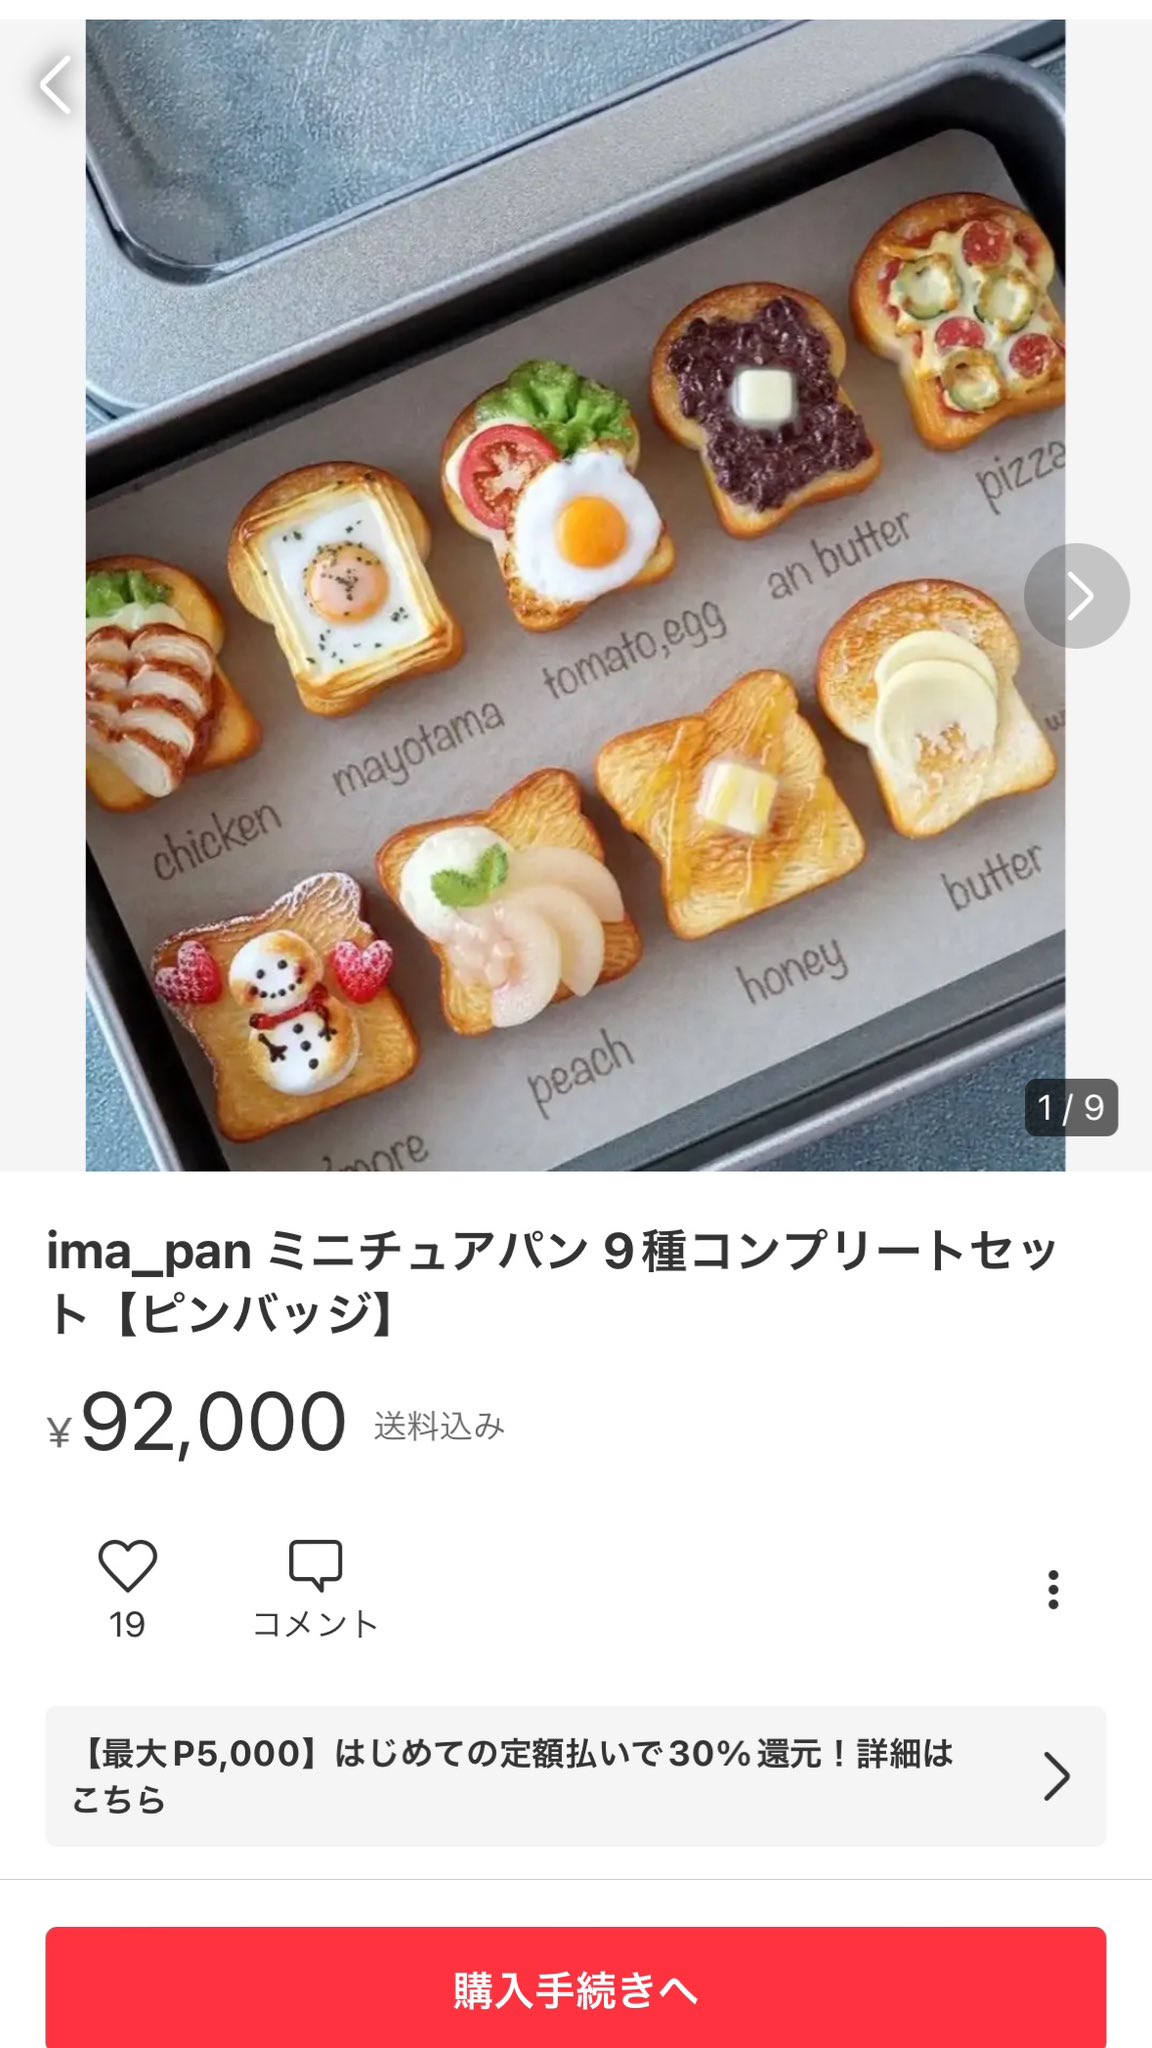 ima_pan ミニチュアパン 9種コンプリートセット【ピンバッジ】